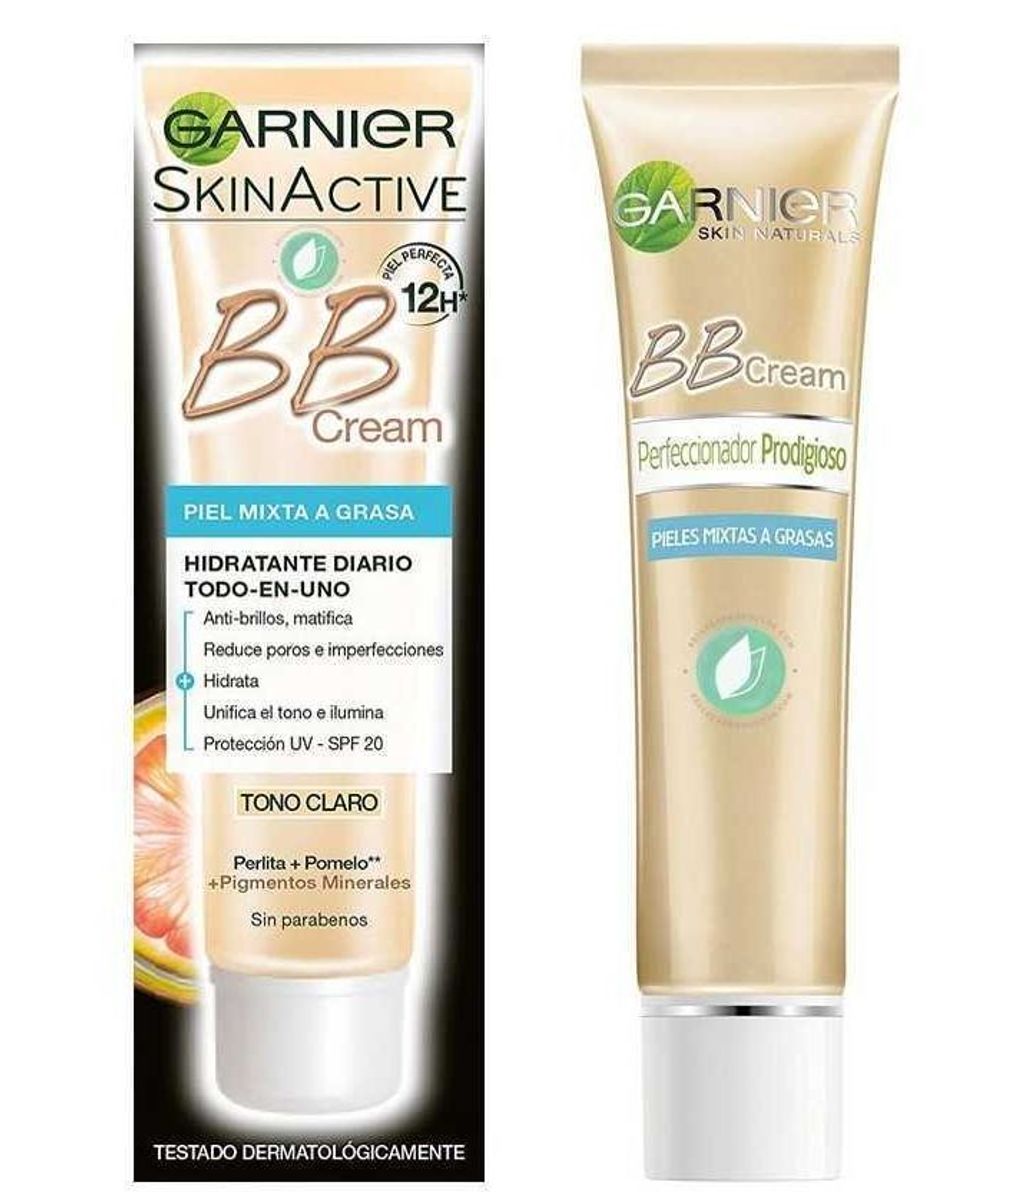 Garnier skin active BB cream piel mixta grasa tono claro 40 ml